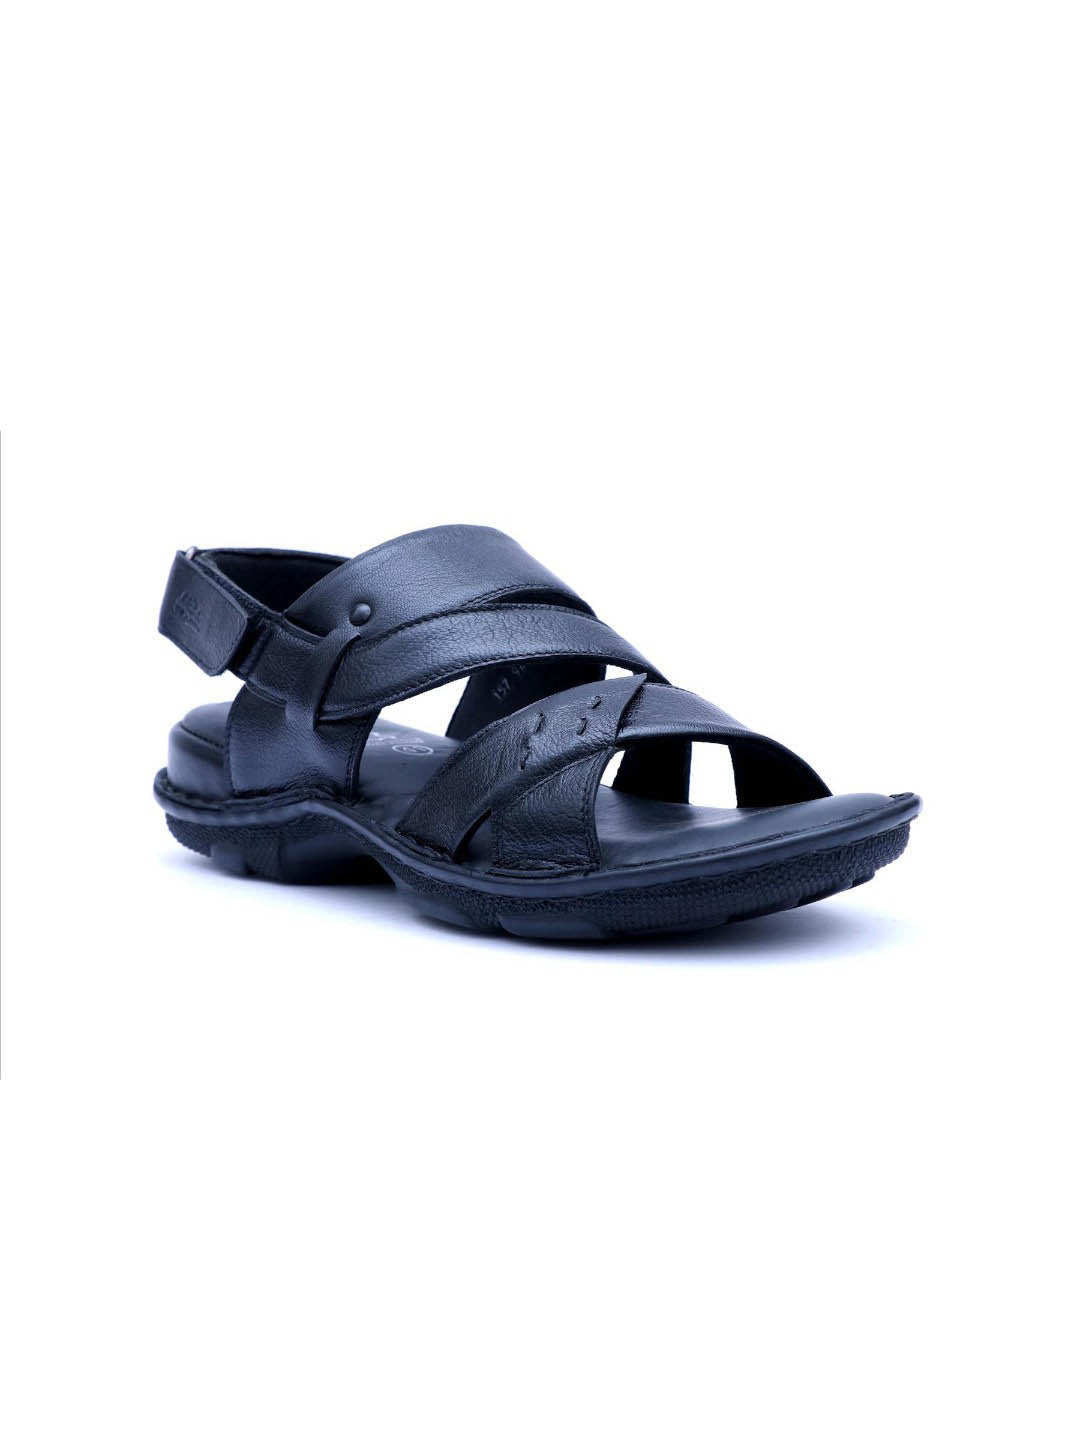 Zixer Synthetic Leather Shoes Cum Sandals For Men  Sandals For Men Latest  Stylish Half Shoes Branded  Ethnic Wedding Look Best Sandal For Boys Monk  Strap For Men  Buy Zixer